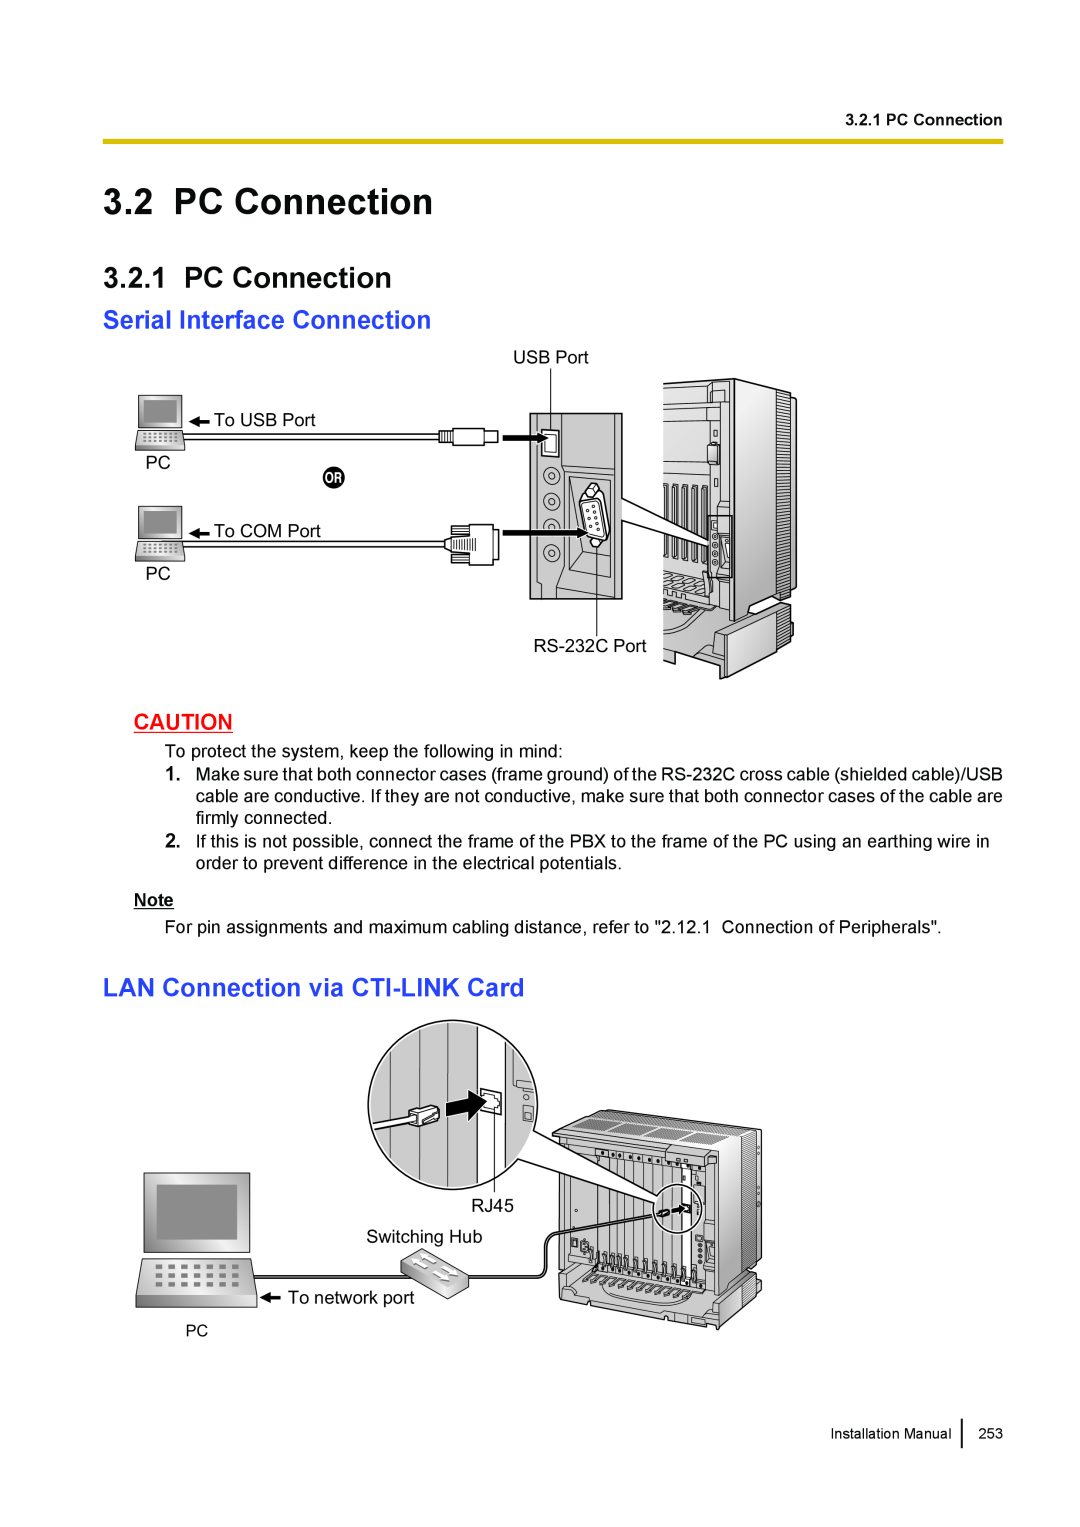 Panasonic KX-TDA100 installation manual PC Connection, Serial Interface Connection, LAN Connection via CTI-LINK Card 